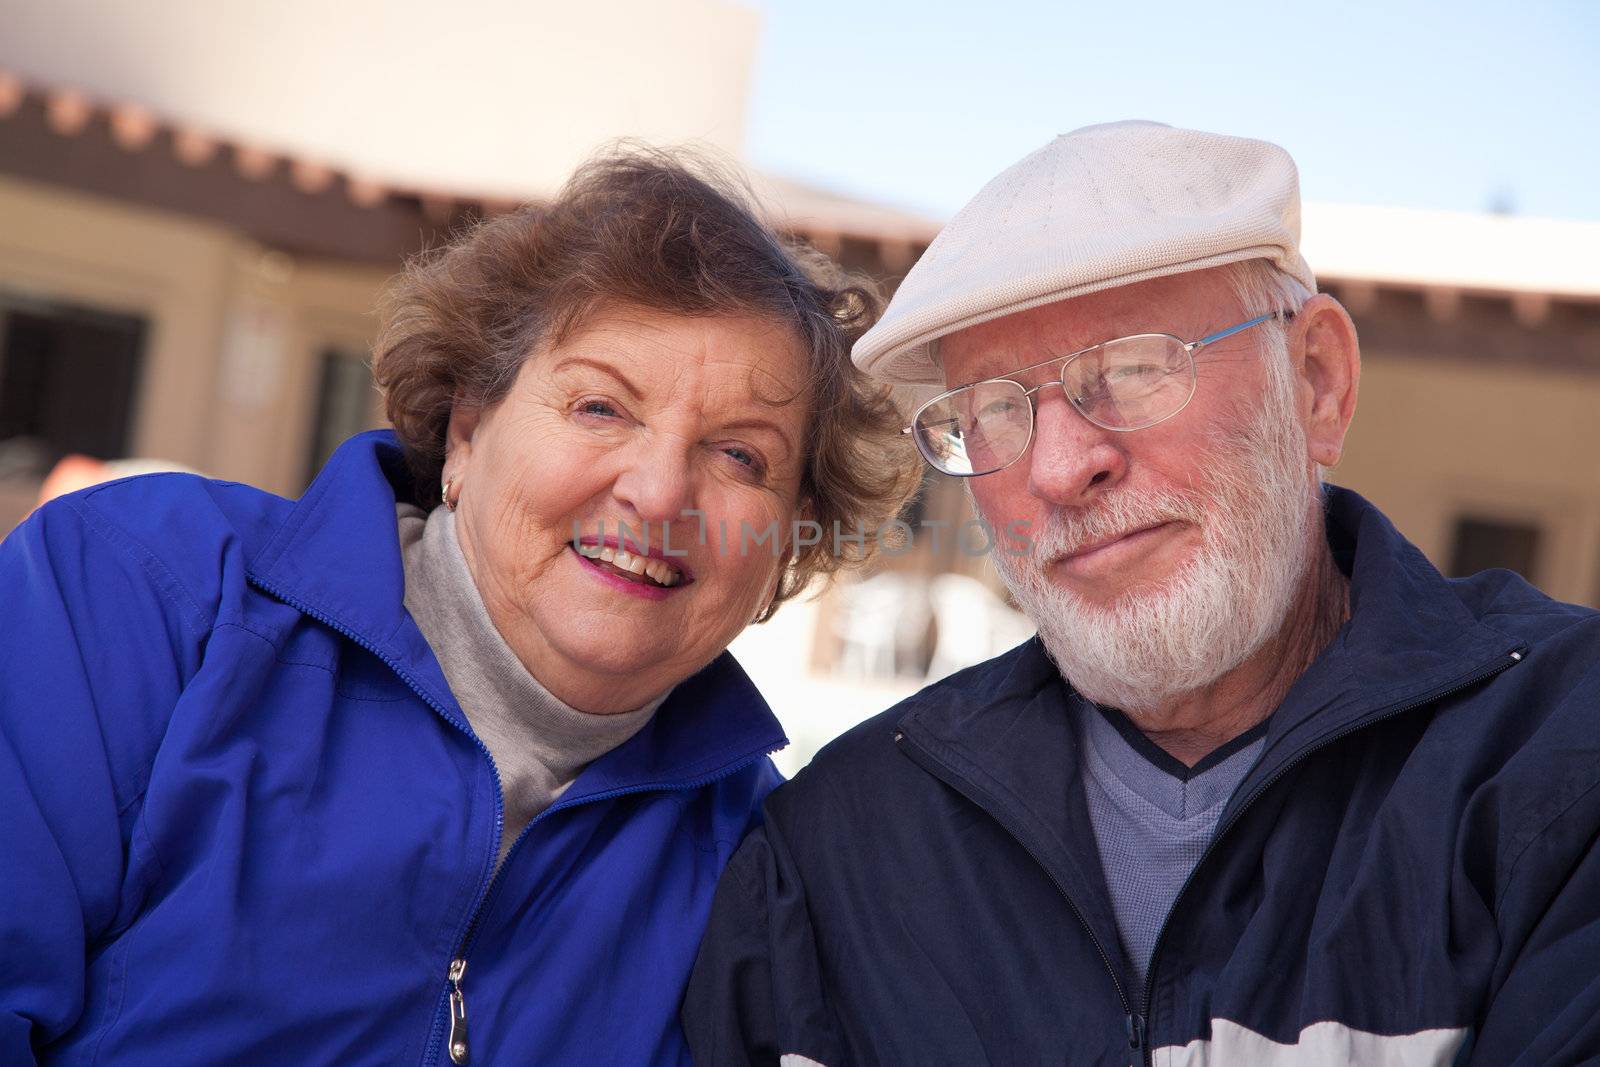 Happy Senior Adult Couple Portrait Bundled Up Outdoors.